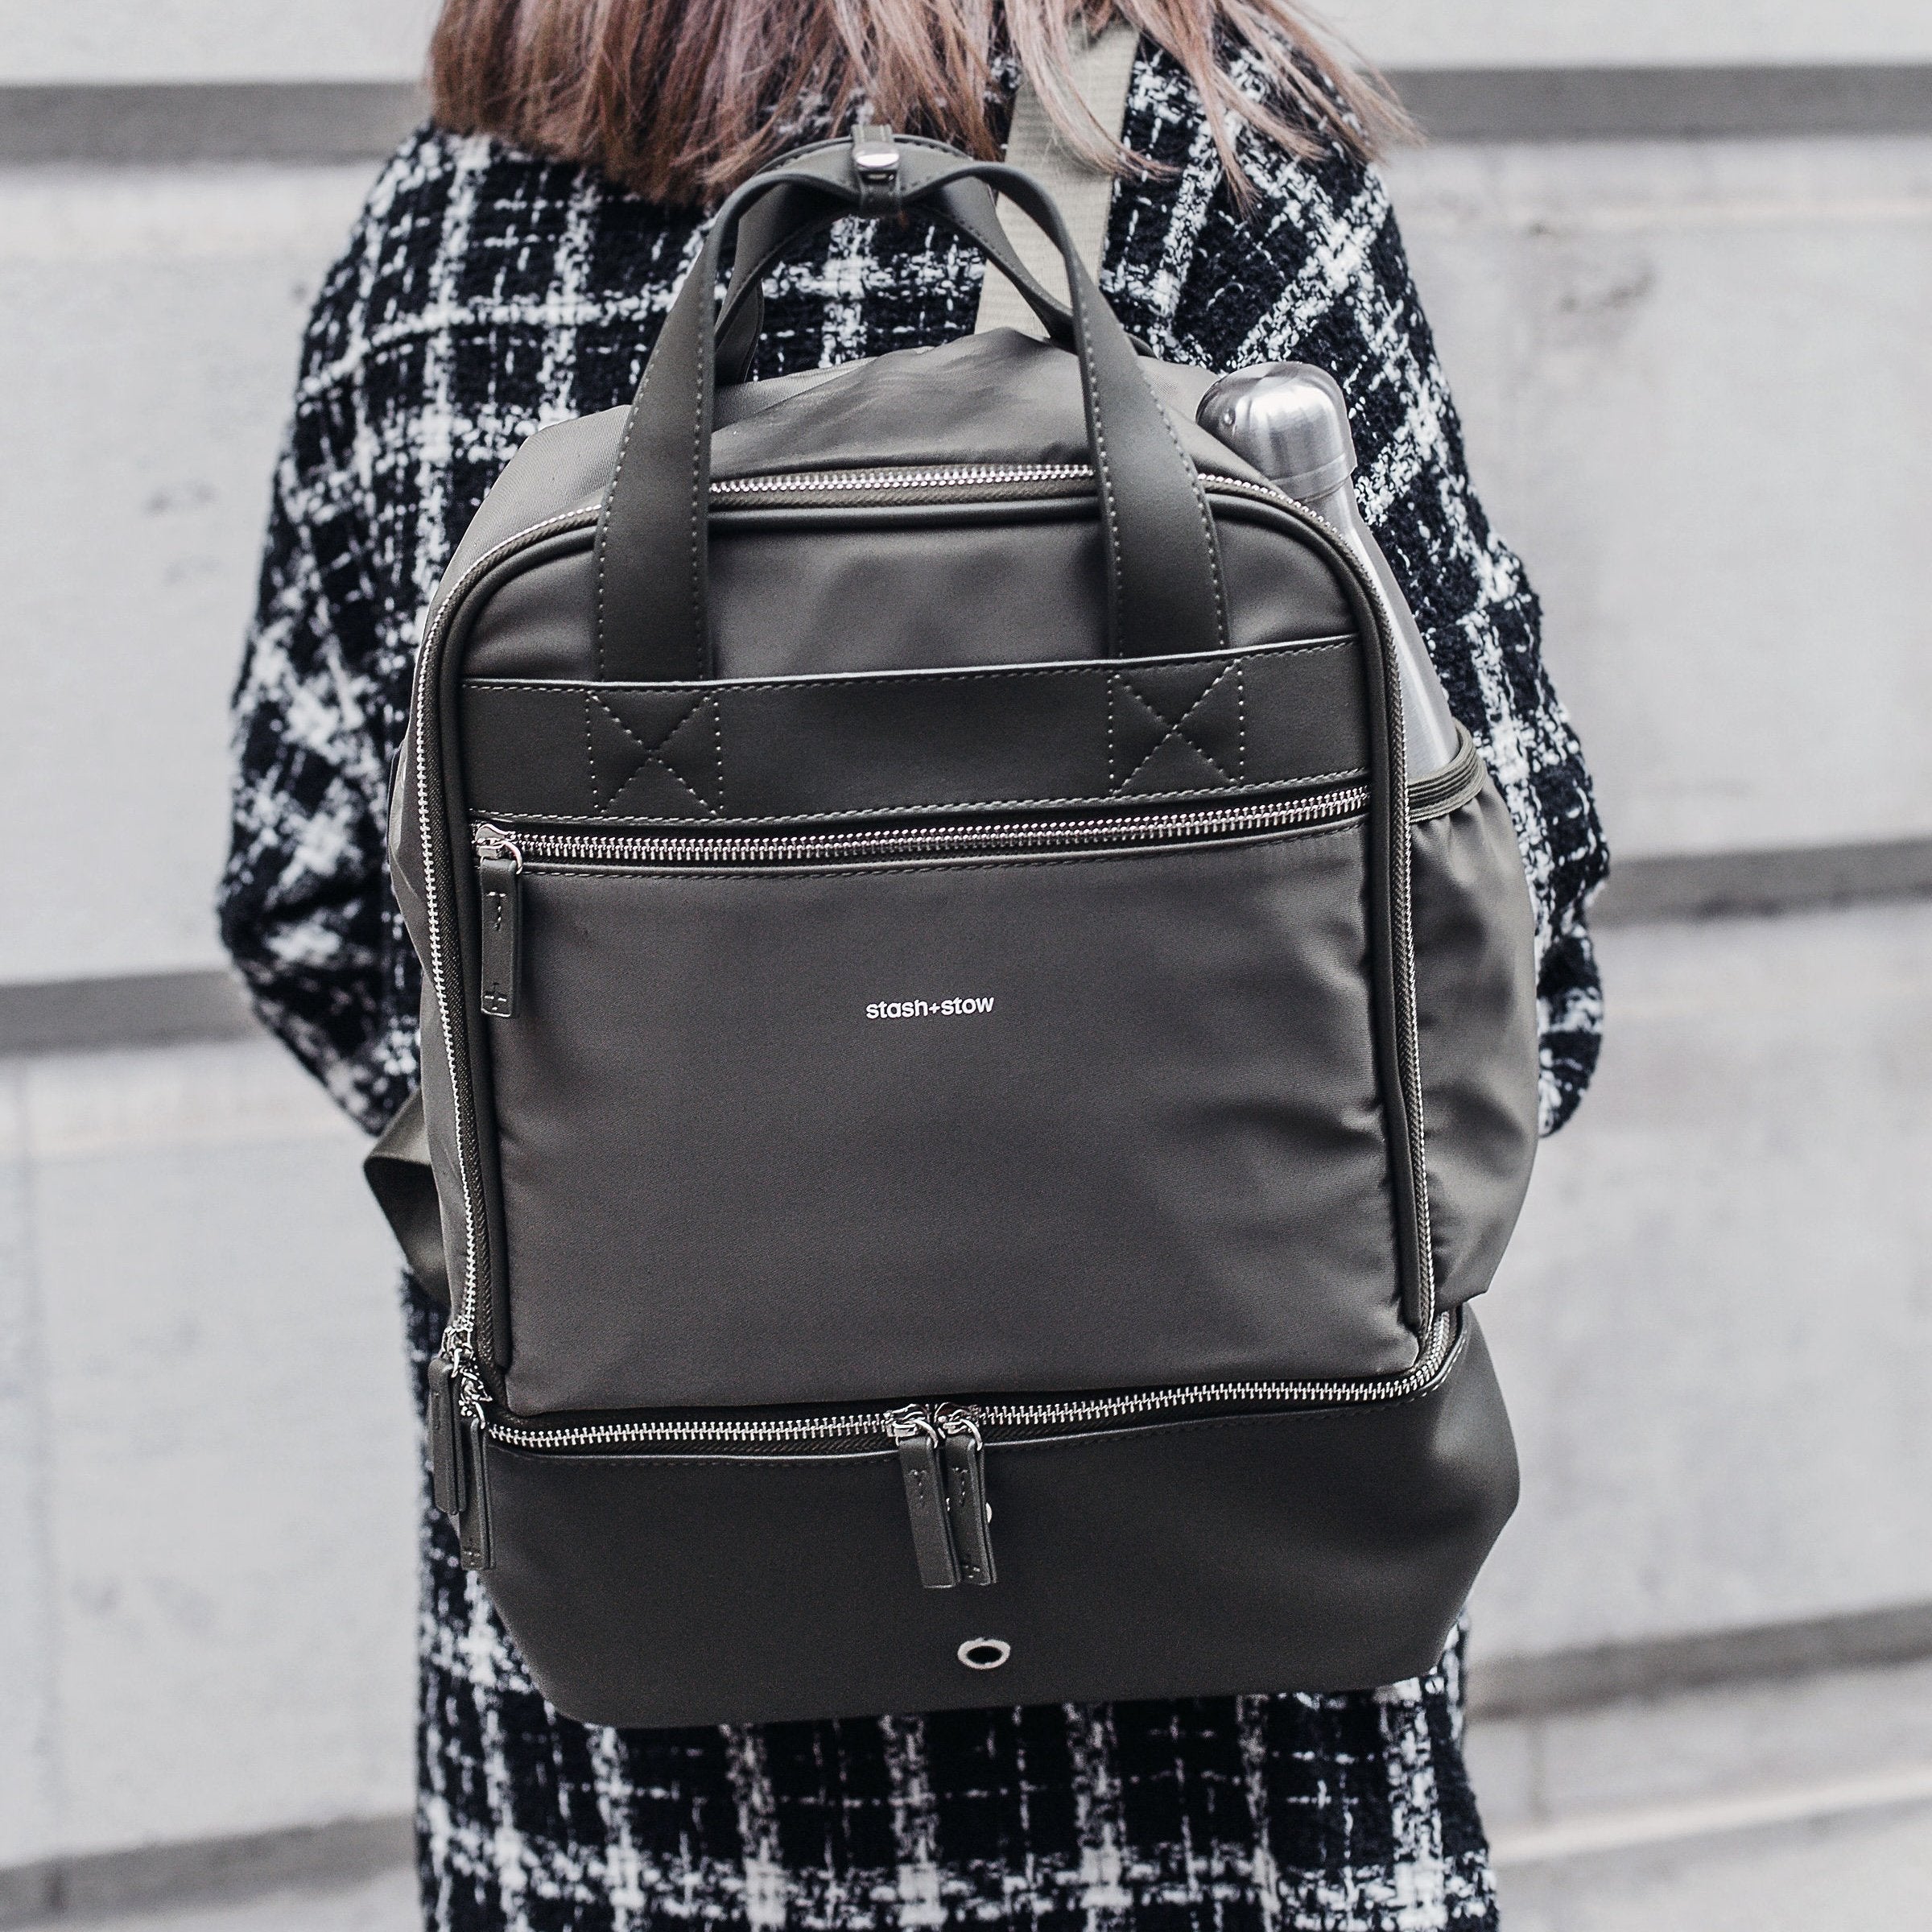 stylish backpack for women with bottle pocket